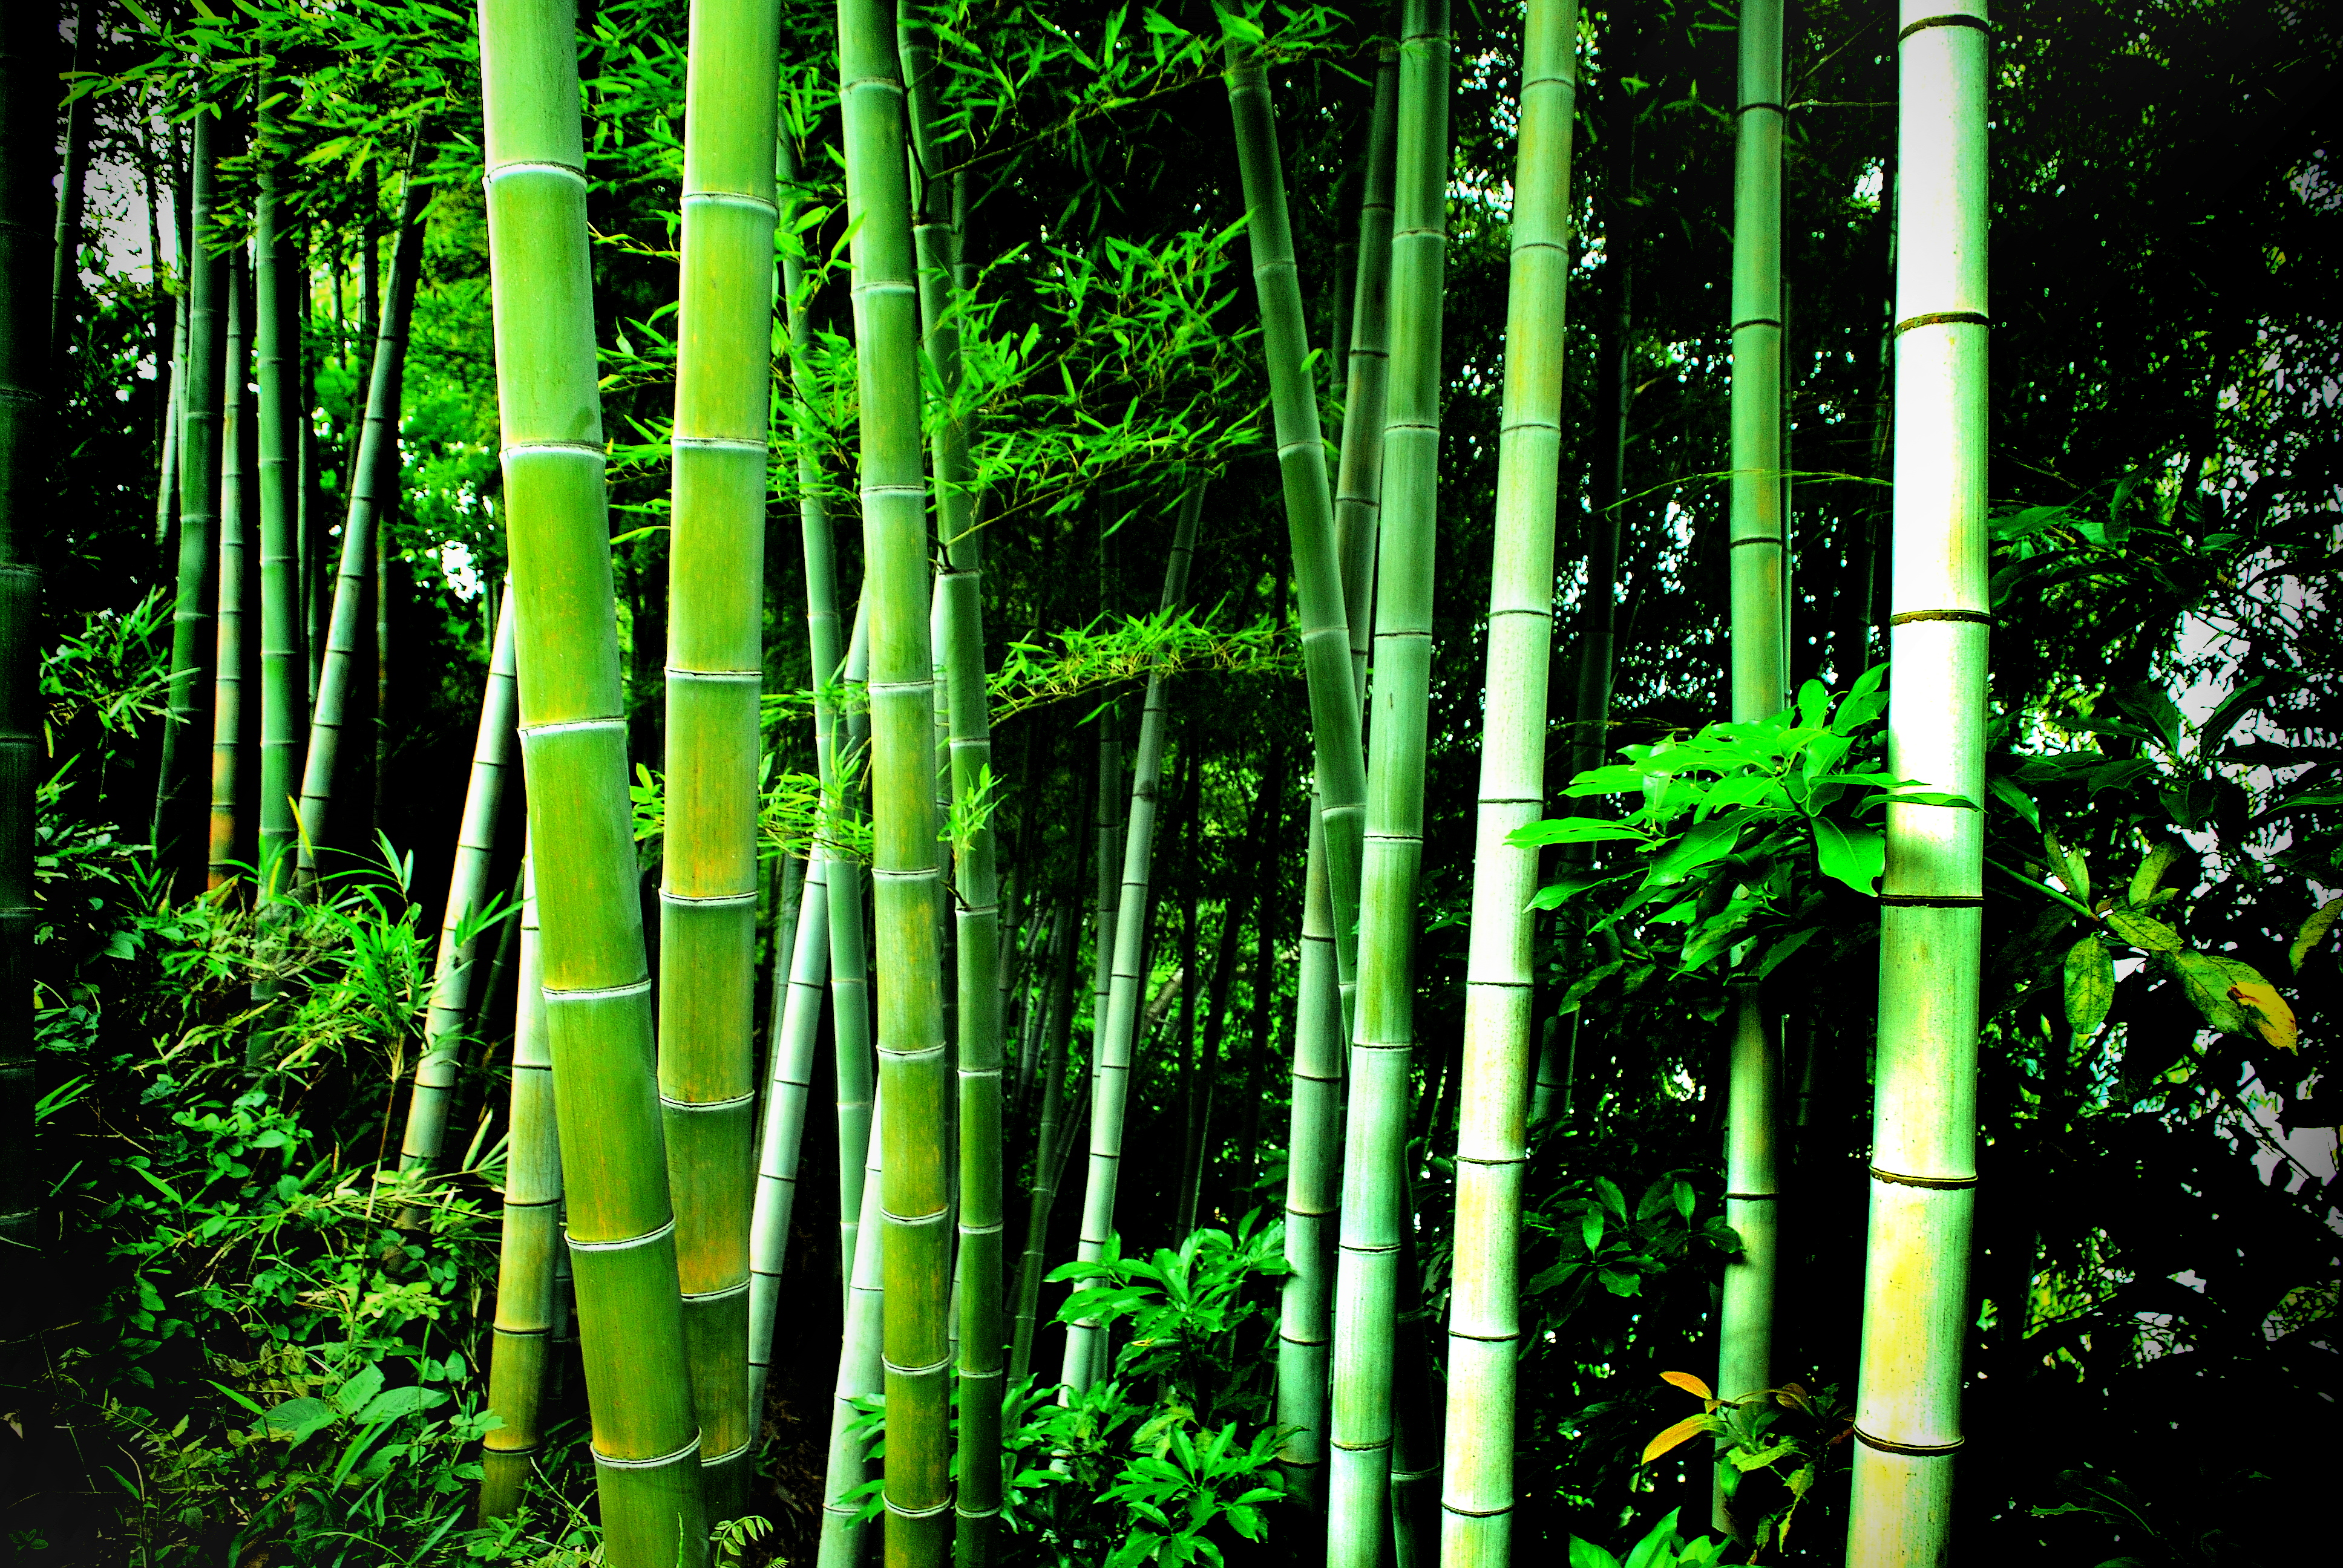 Green bamboo photo